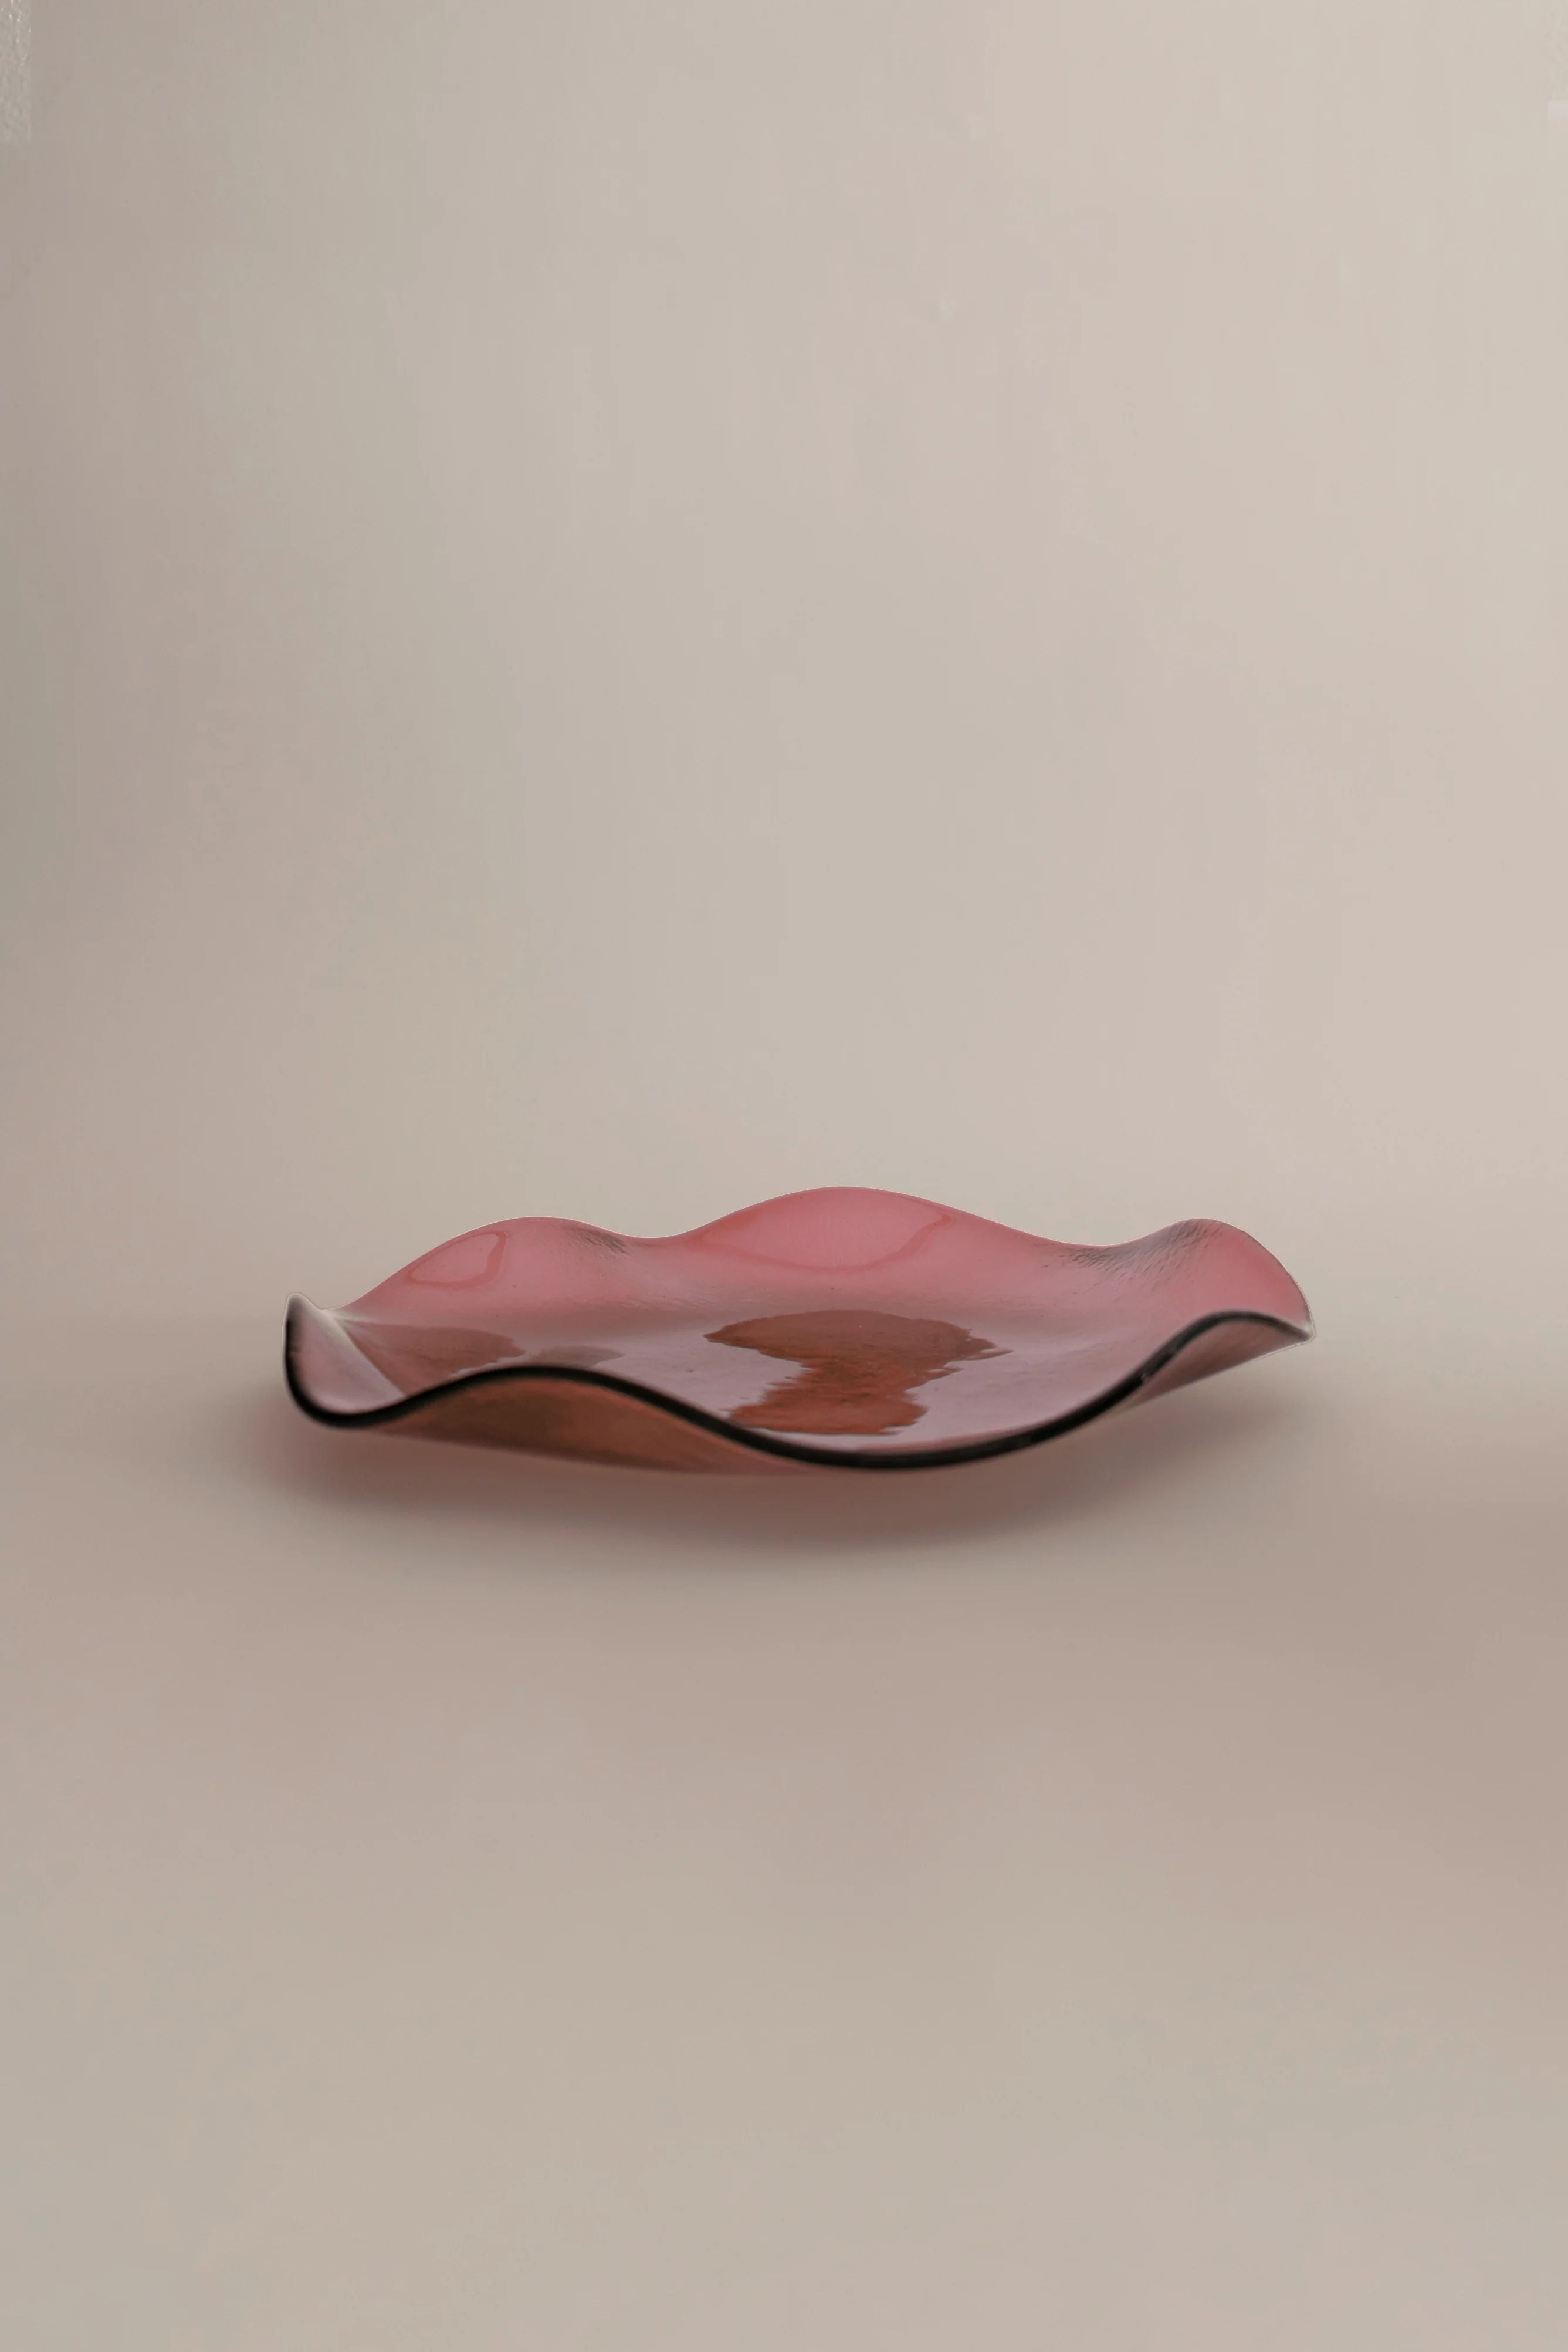 Charger Plates Petal Plate - Large Rose (Transparent) Sophie Lou Jacobsen